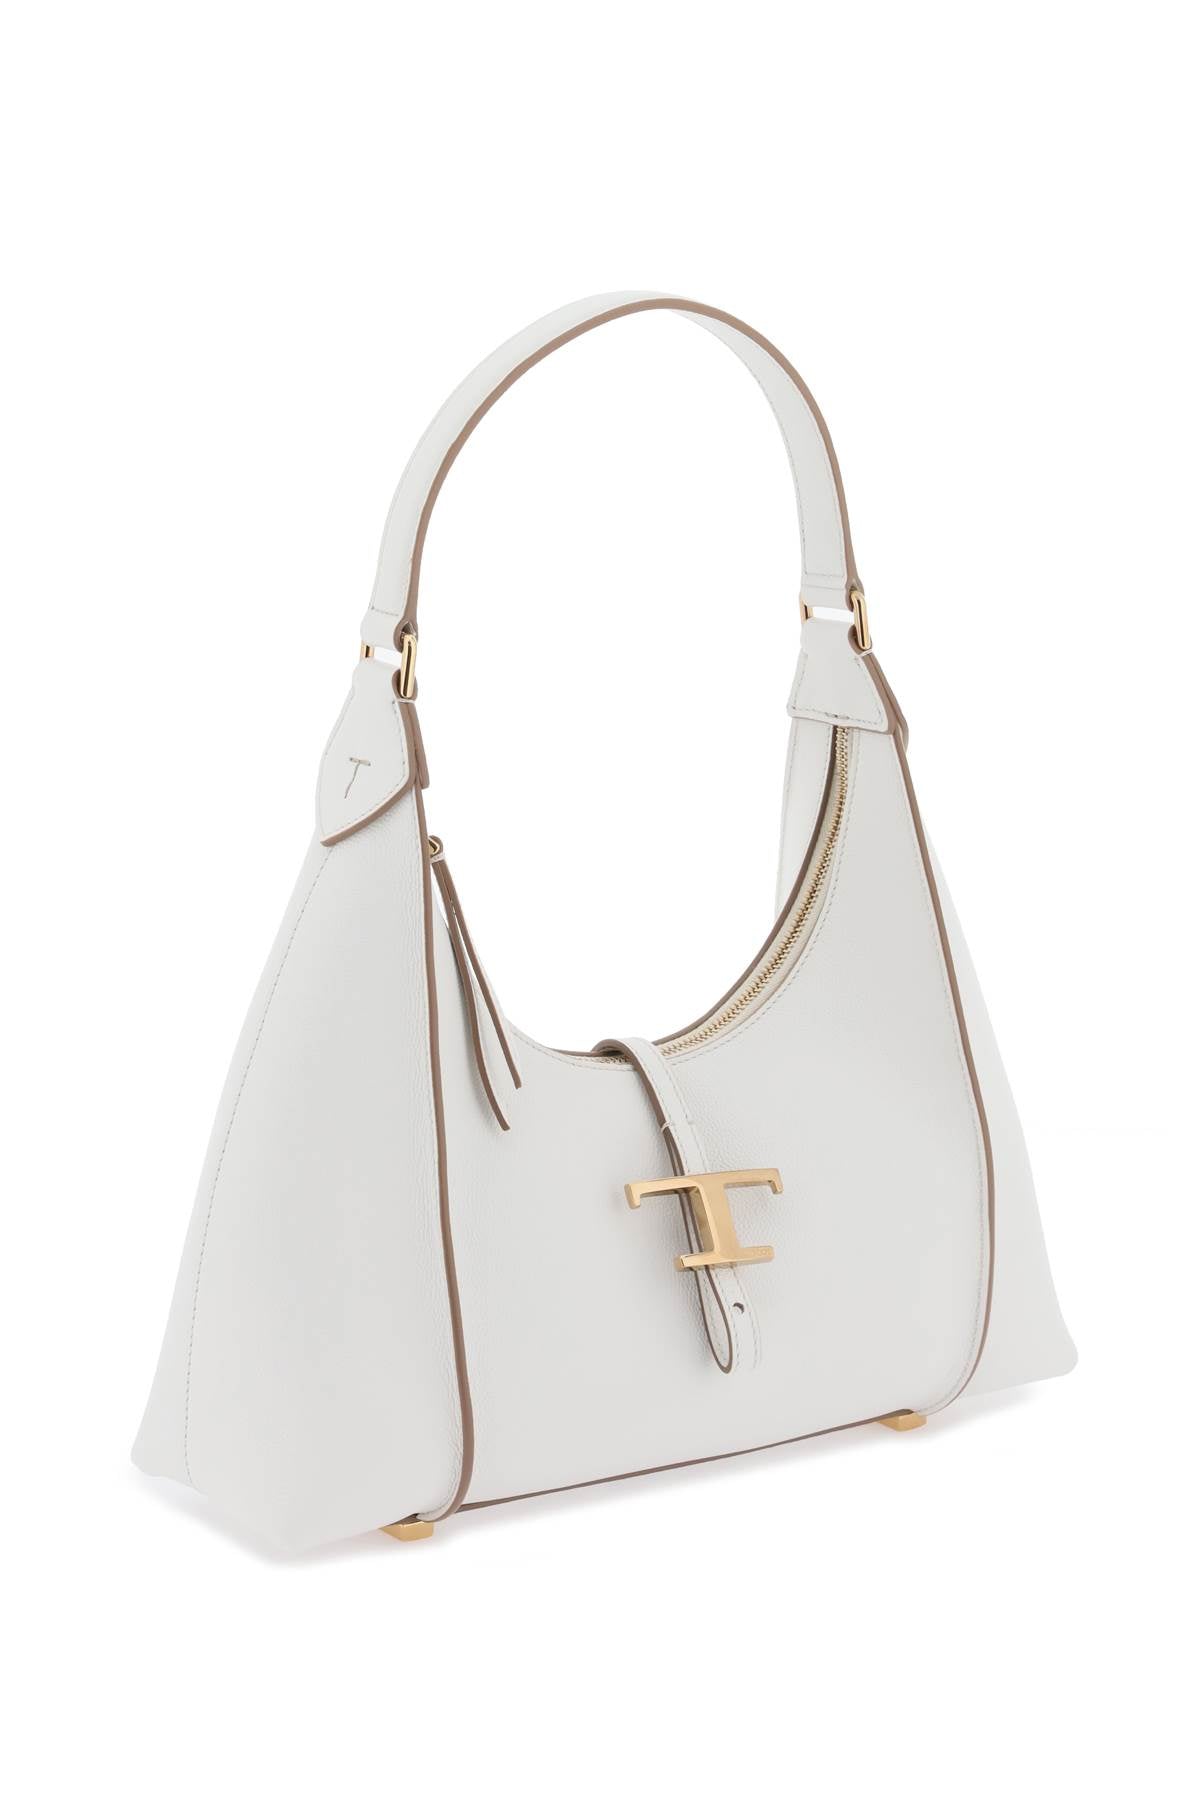 TOD'S Timeless White Calfskin Hobo Handbag with T-Shaped Metal Charm - Small 31x27x11cm